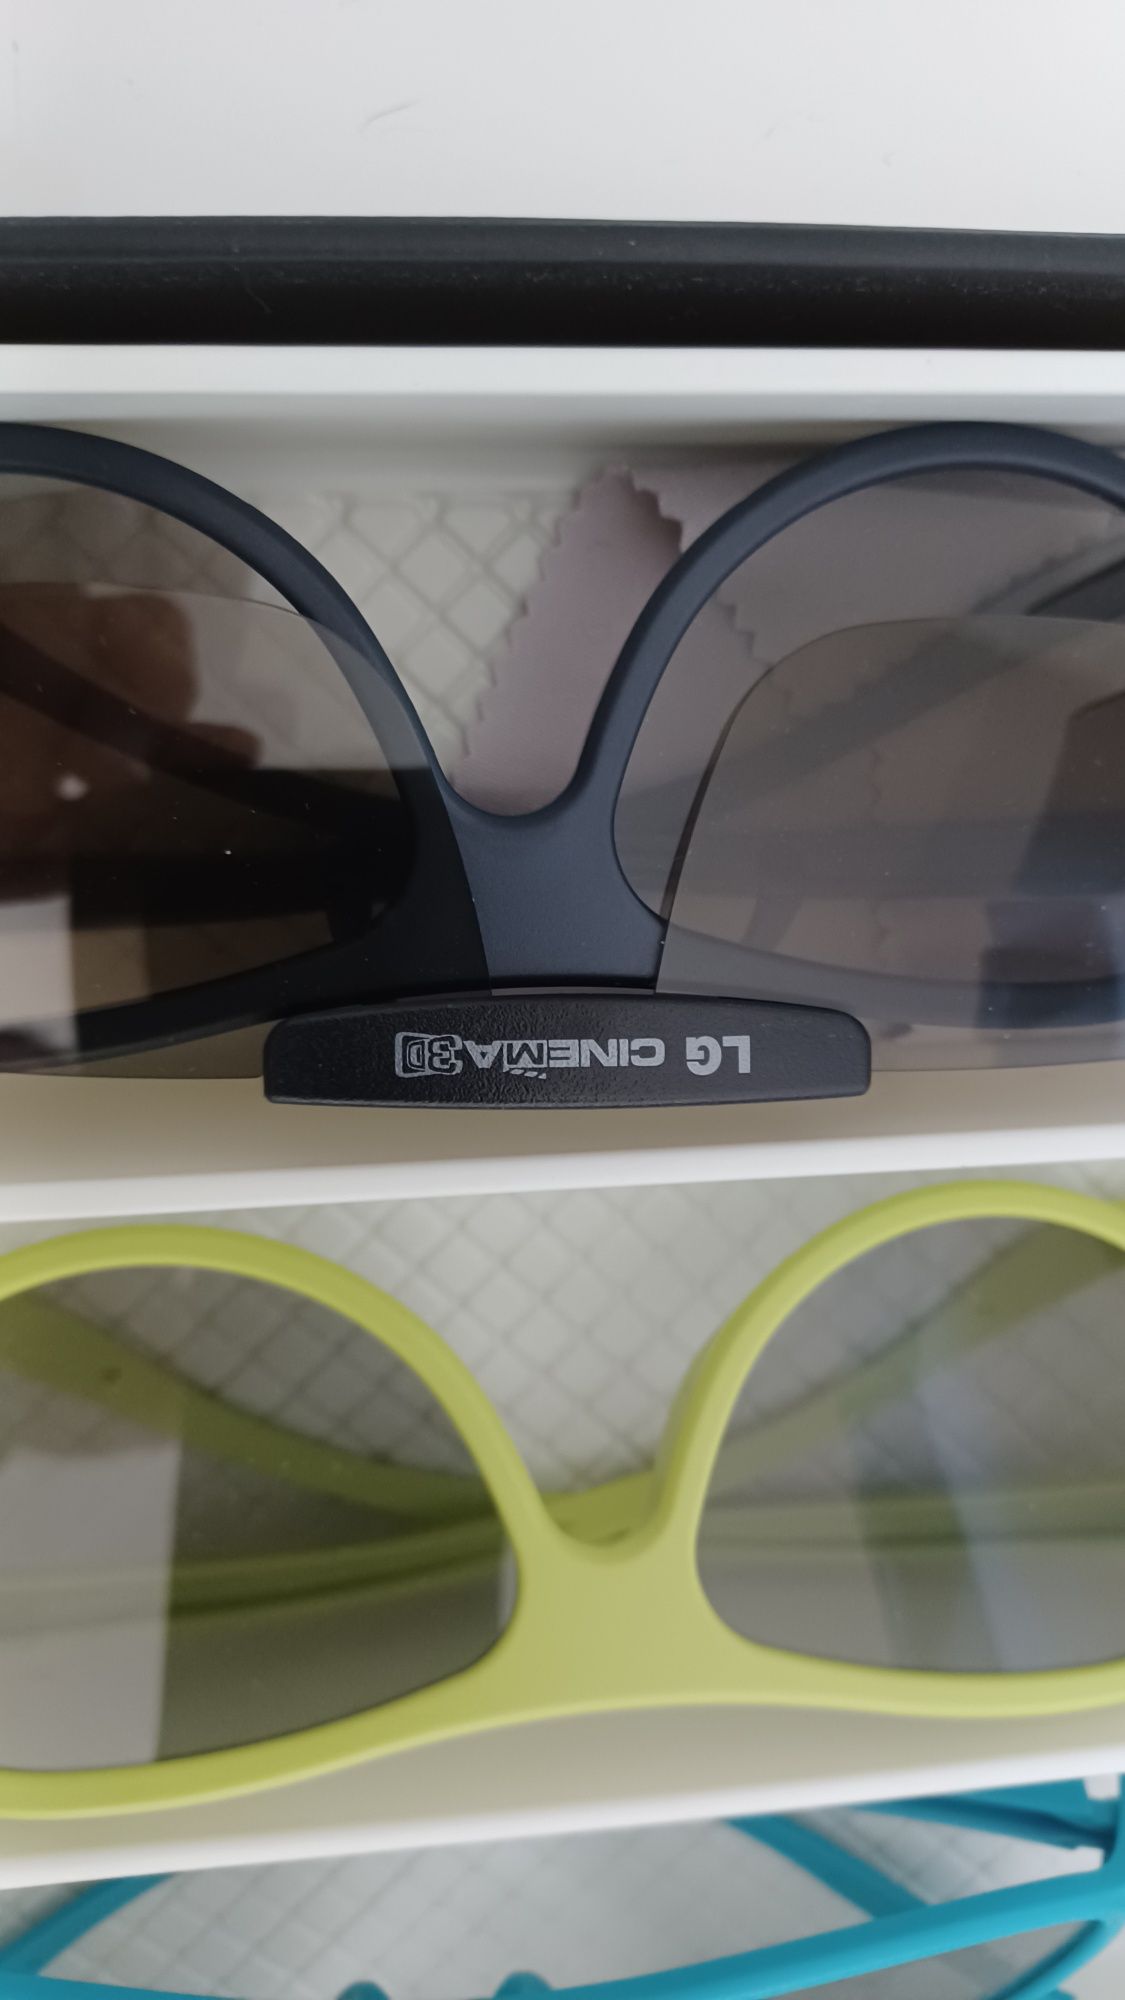 Óculos cinema 3D LG